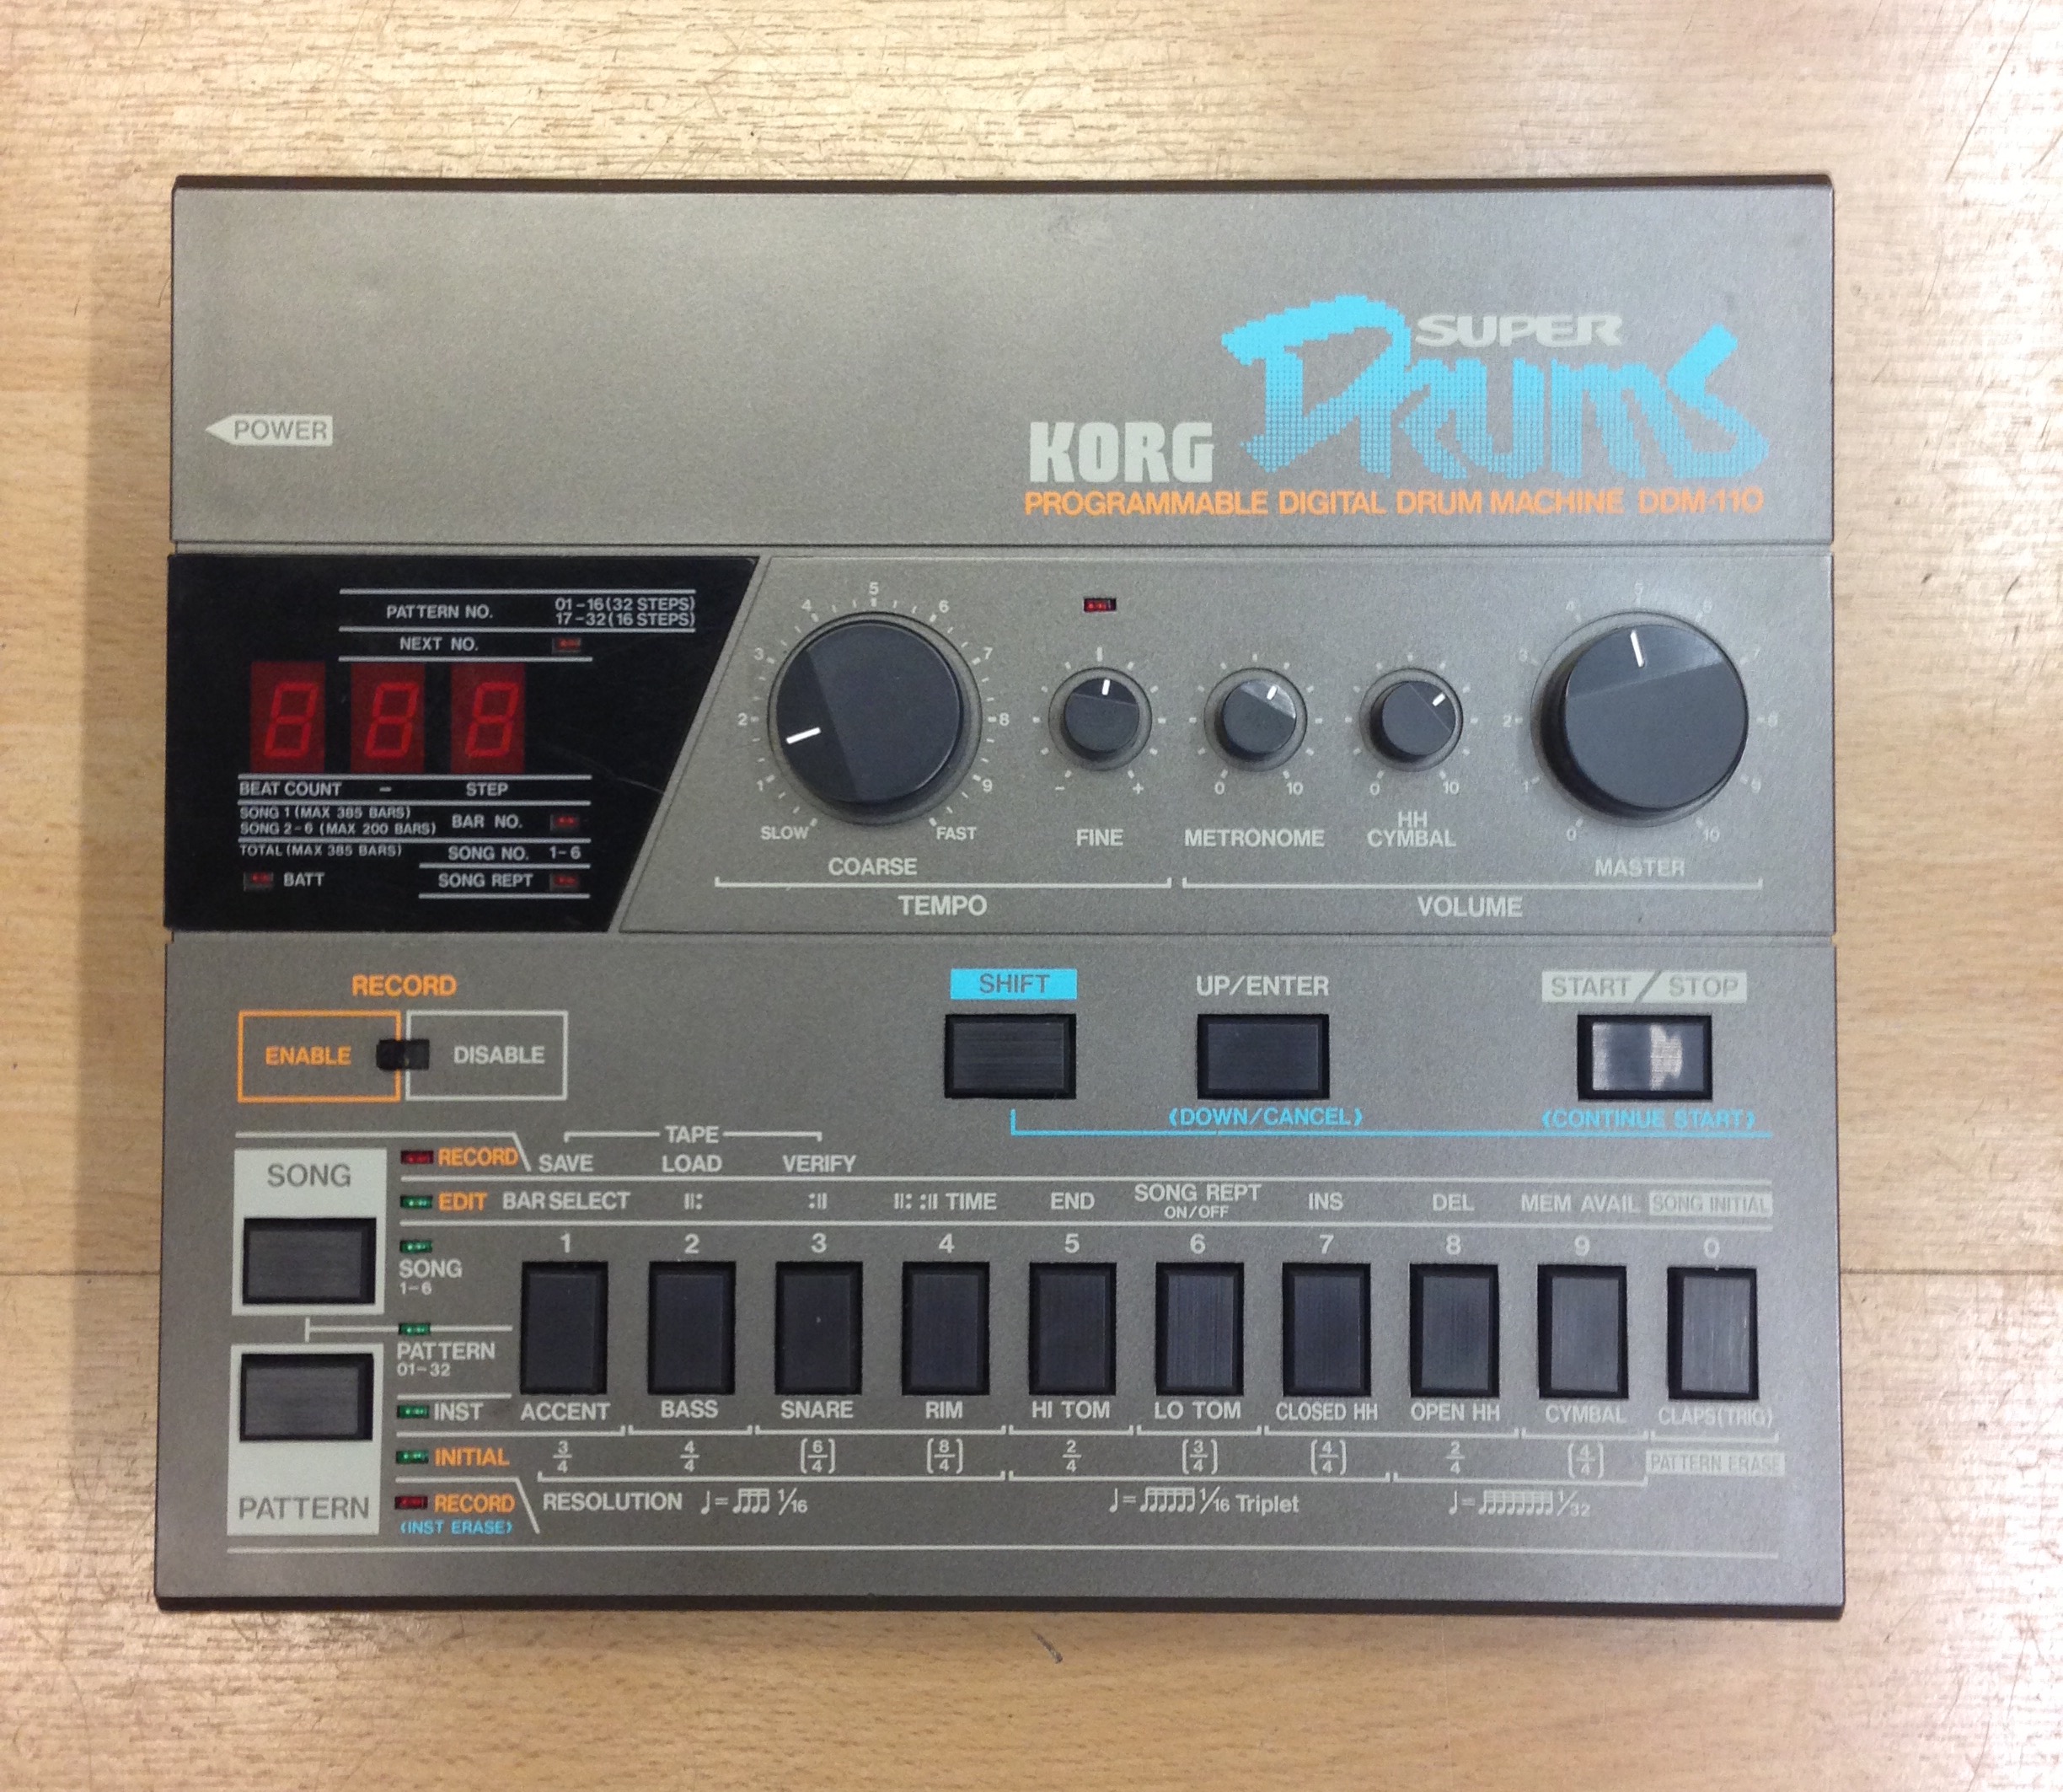 Korg Super Drums DDM-110 for sale at X Electrical